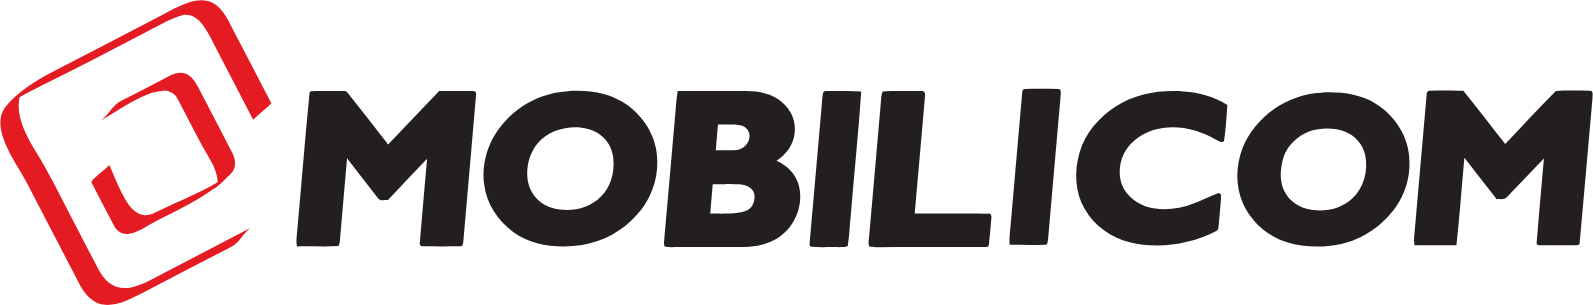 Mobilicom logo large (transparent PNG)